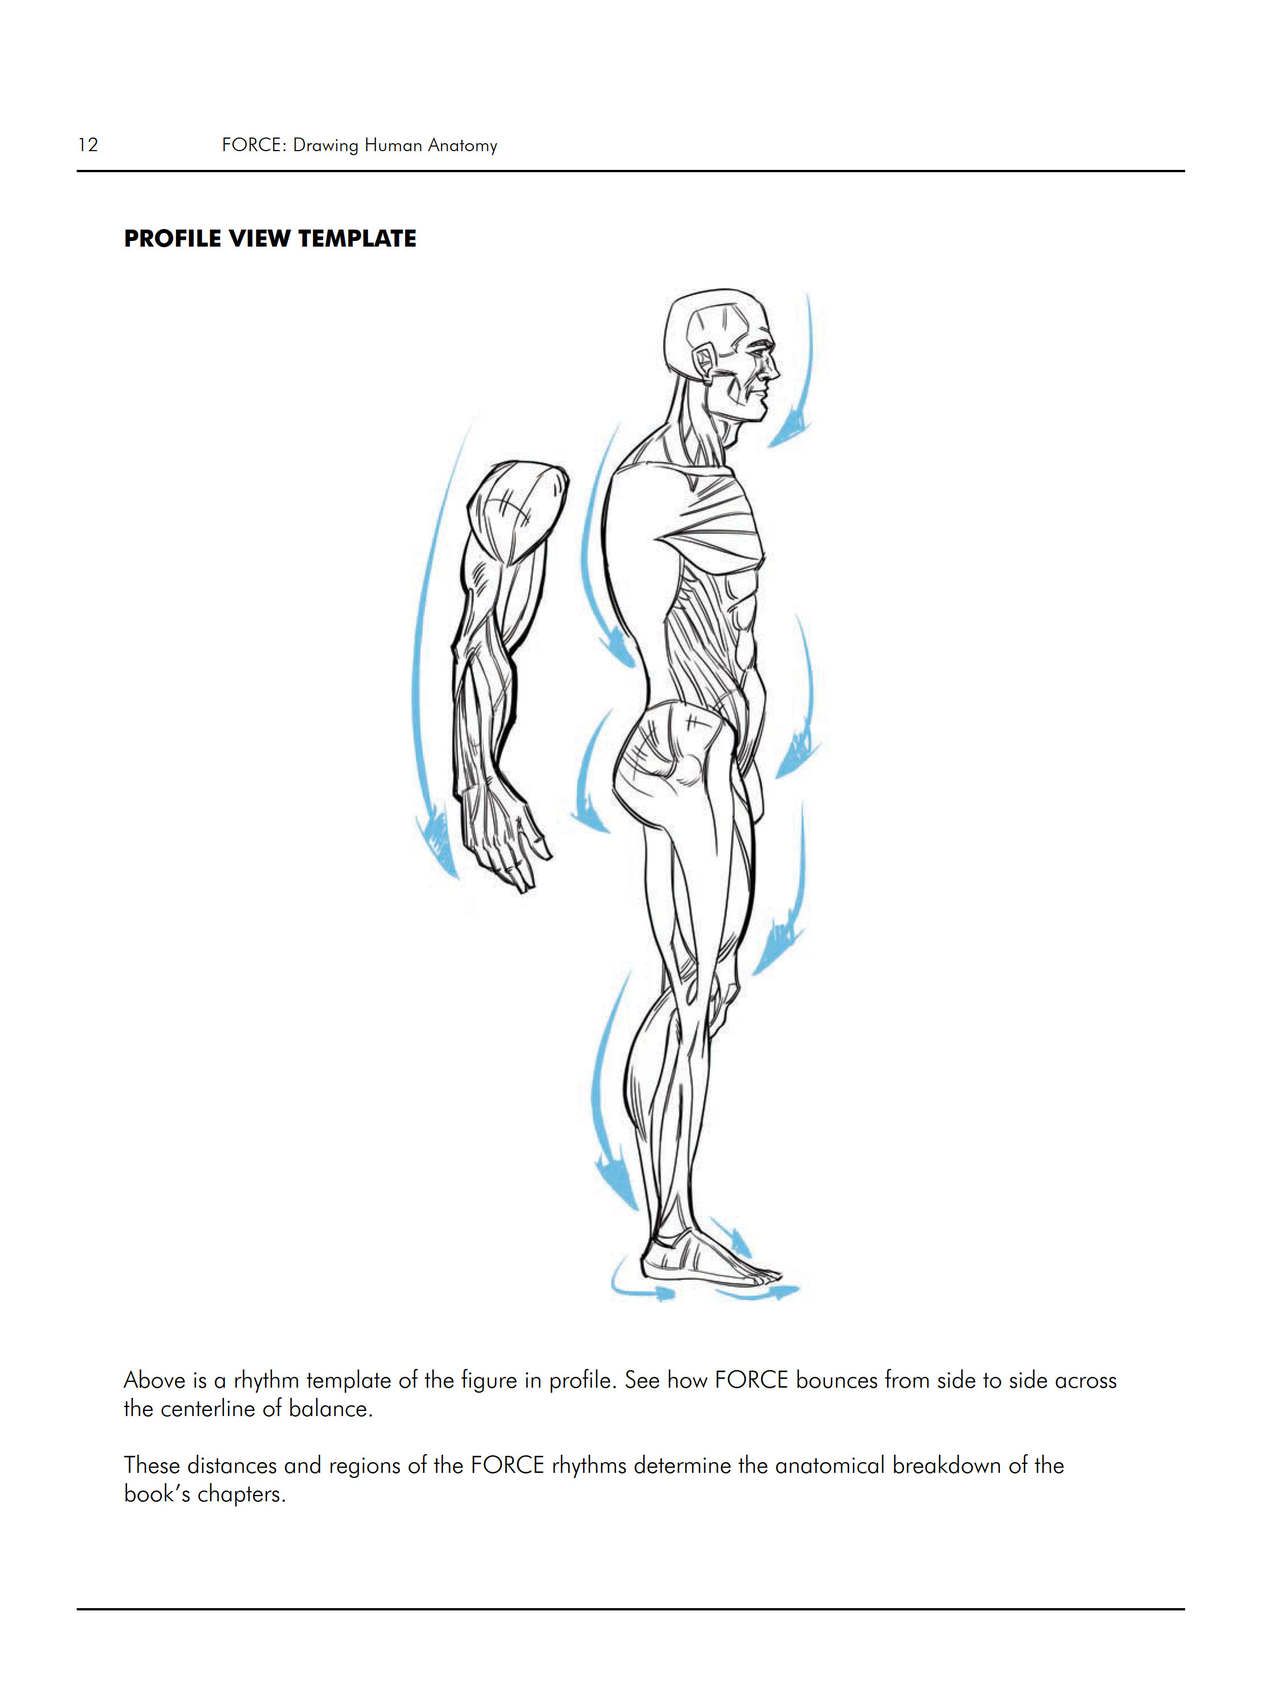 Force. Drawing human anatomy - Michael D. Mattesi [Digital] 33